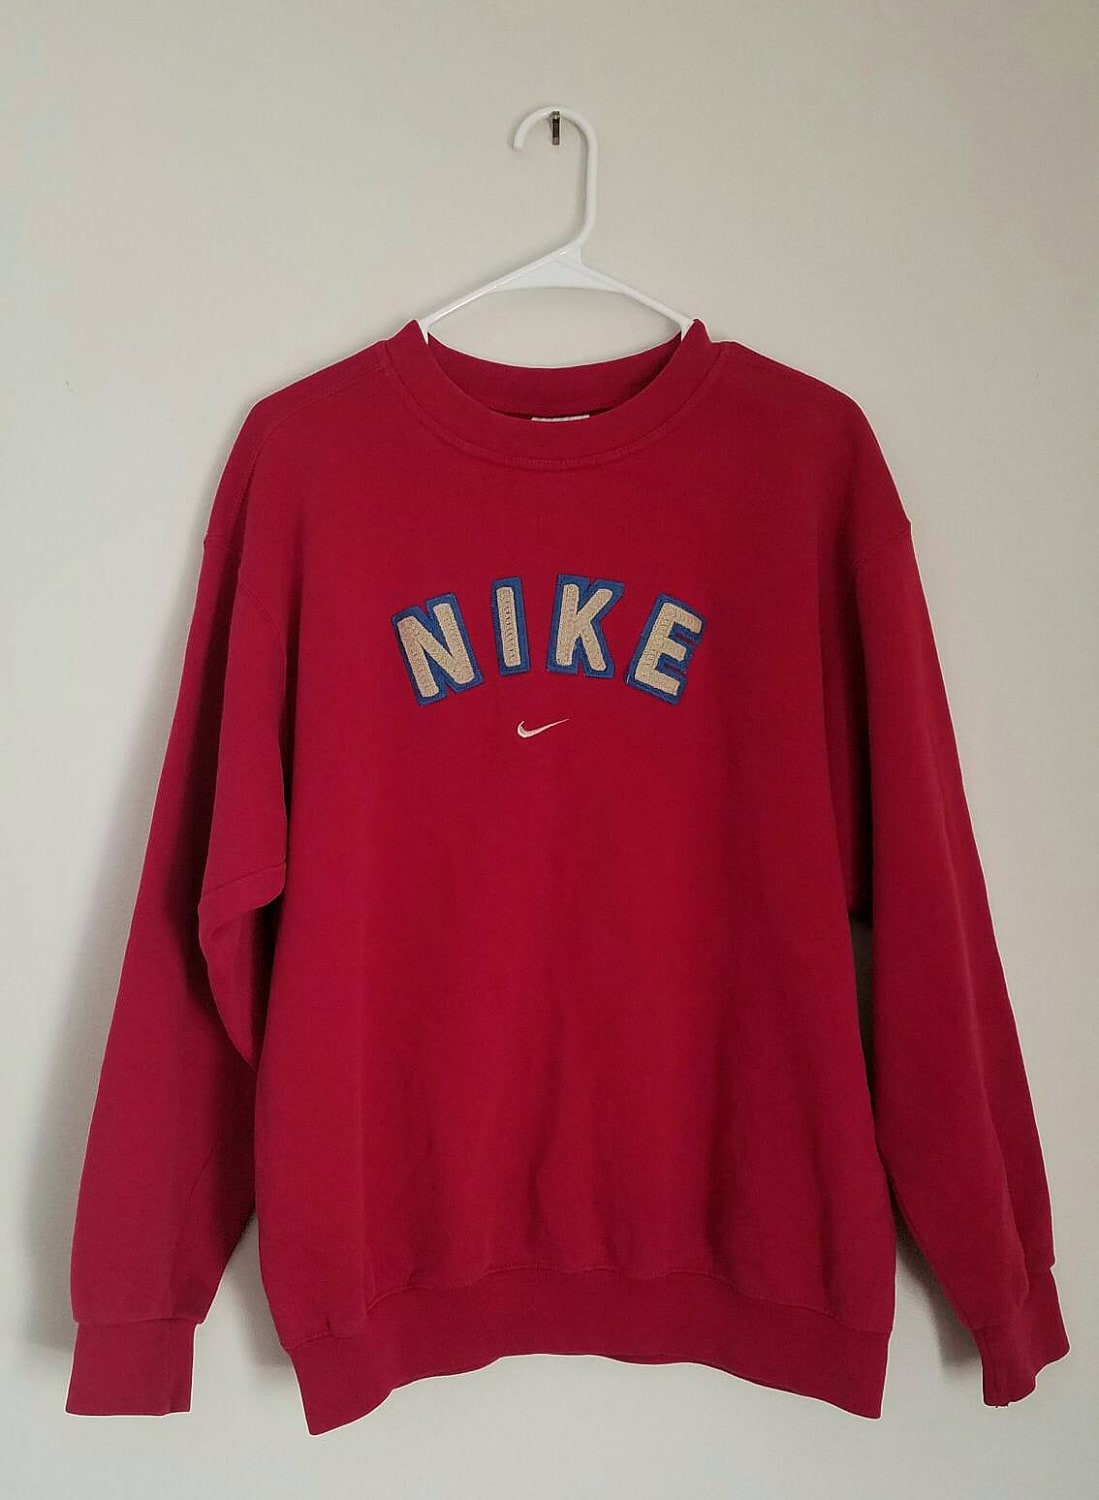 Vintage Nike Sweatshirt Spellout with Logo size Medium